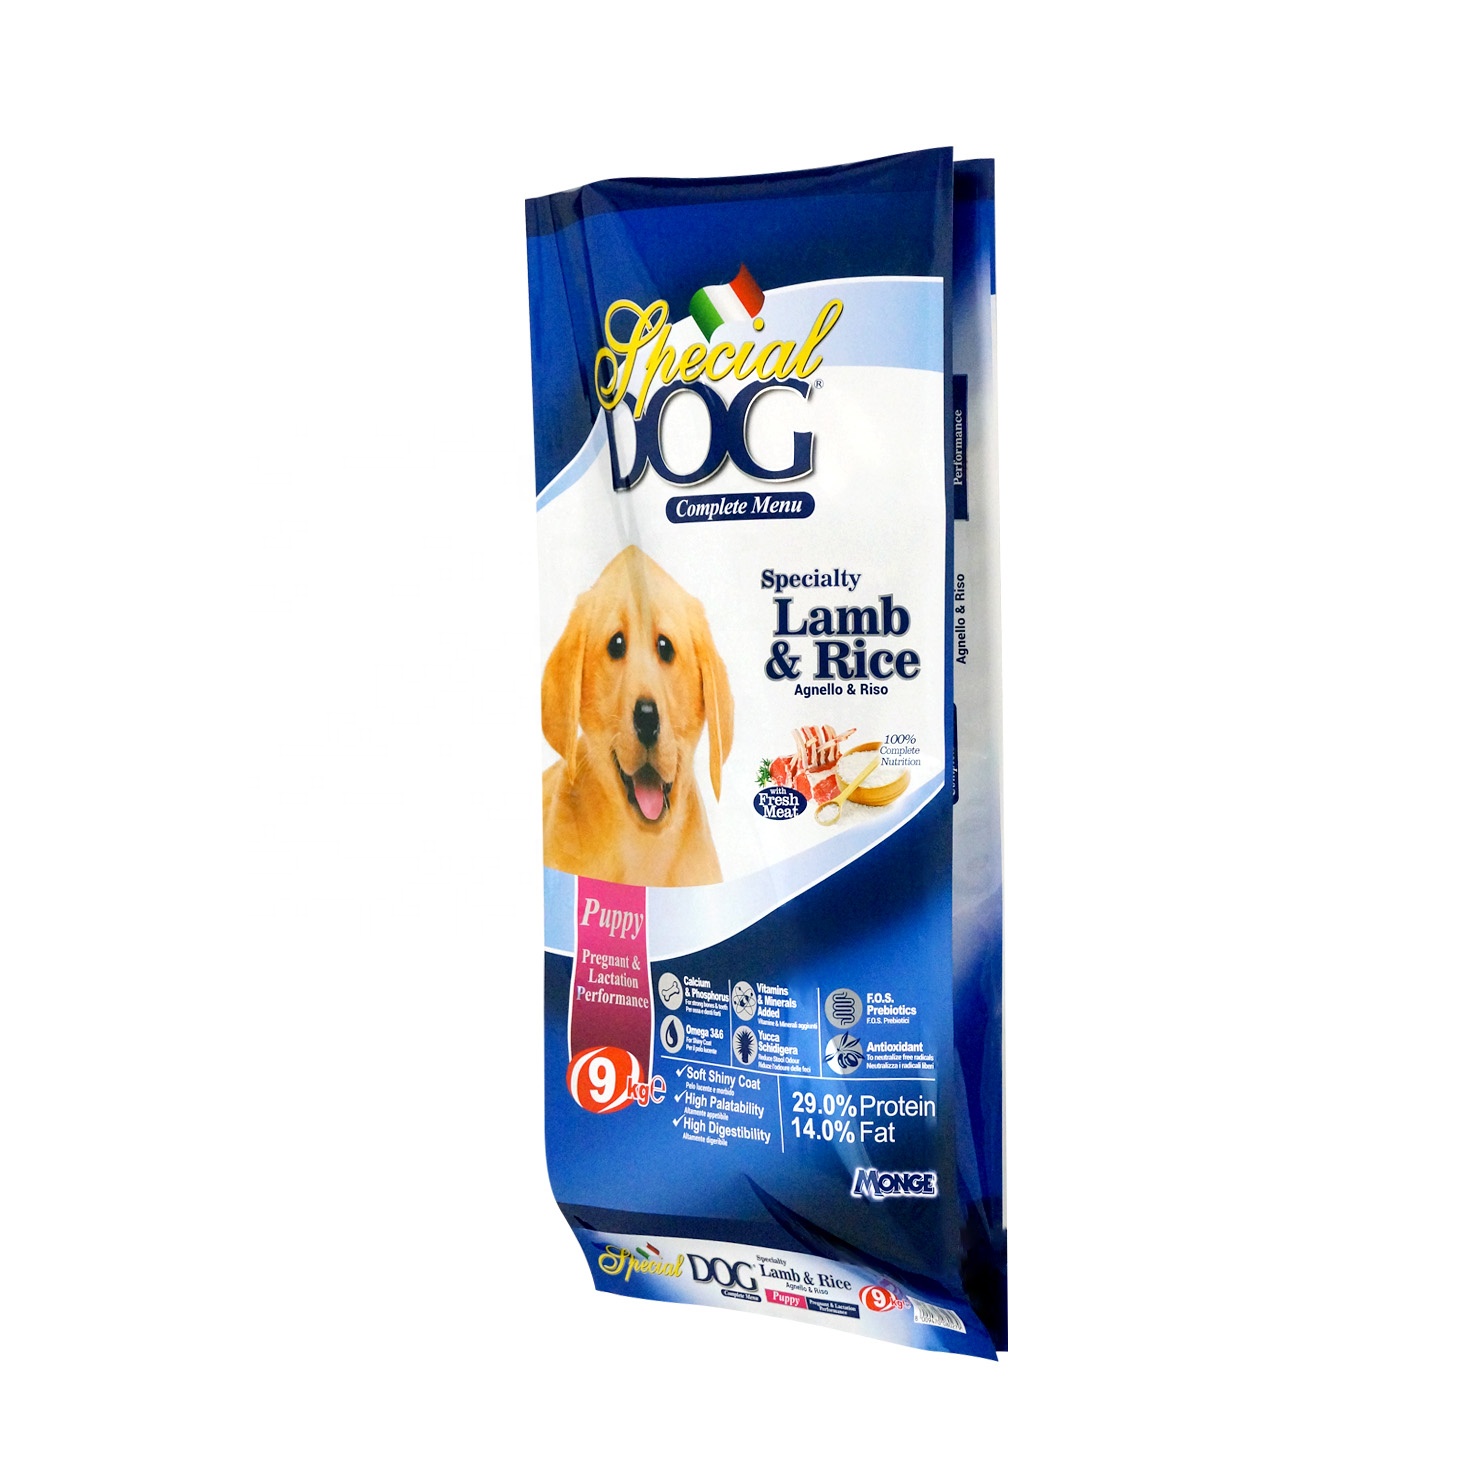 DQ PACK Custom Printing Flexible Packaging Large Capacity Doypack For Pet Food Packaging